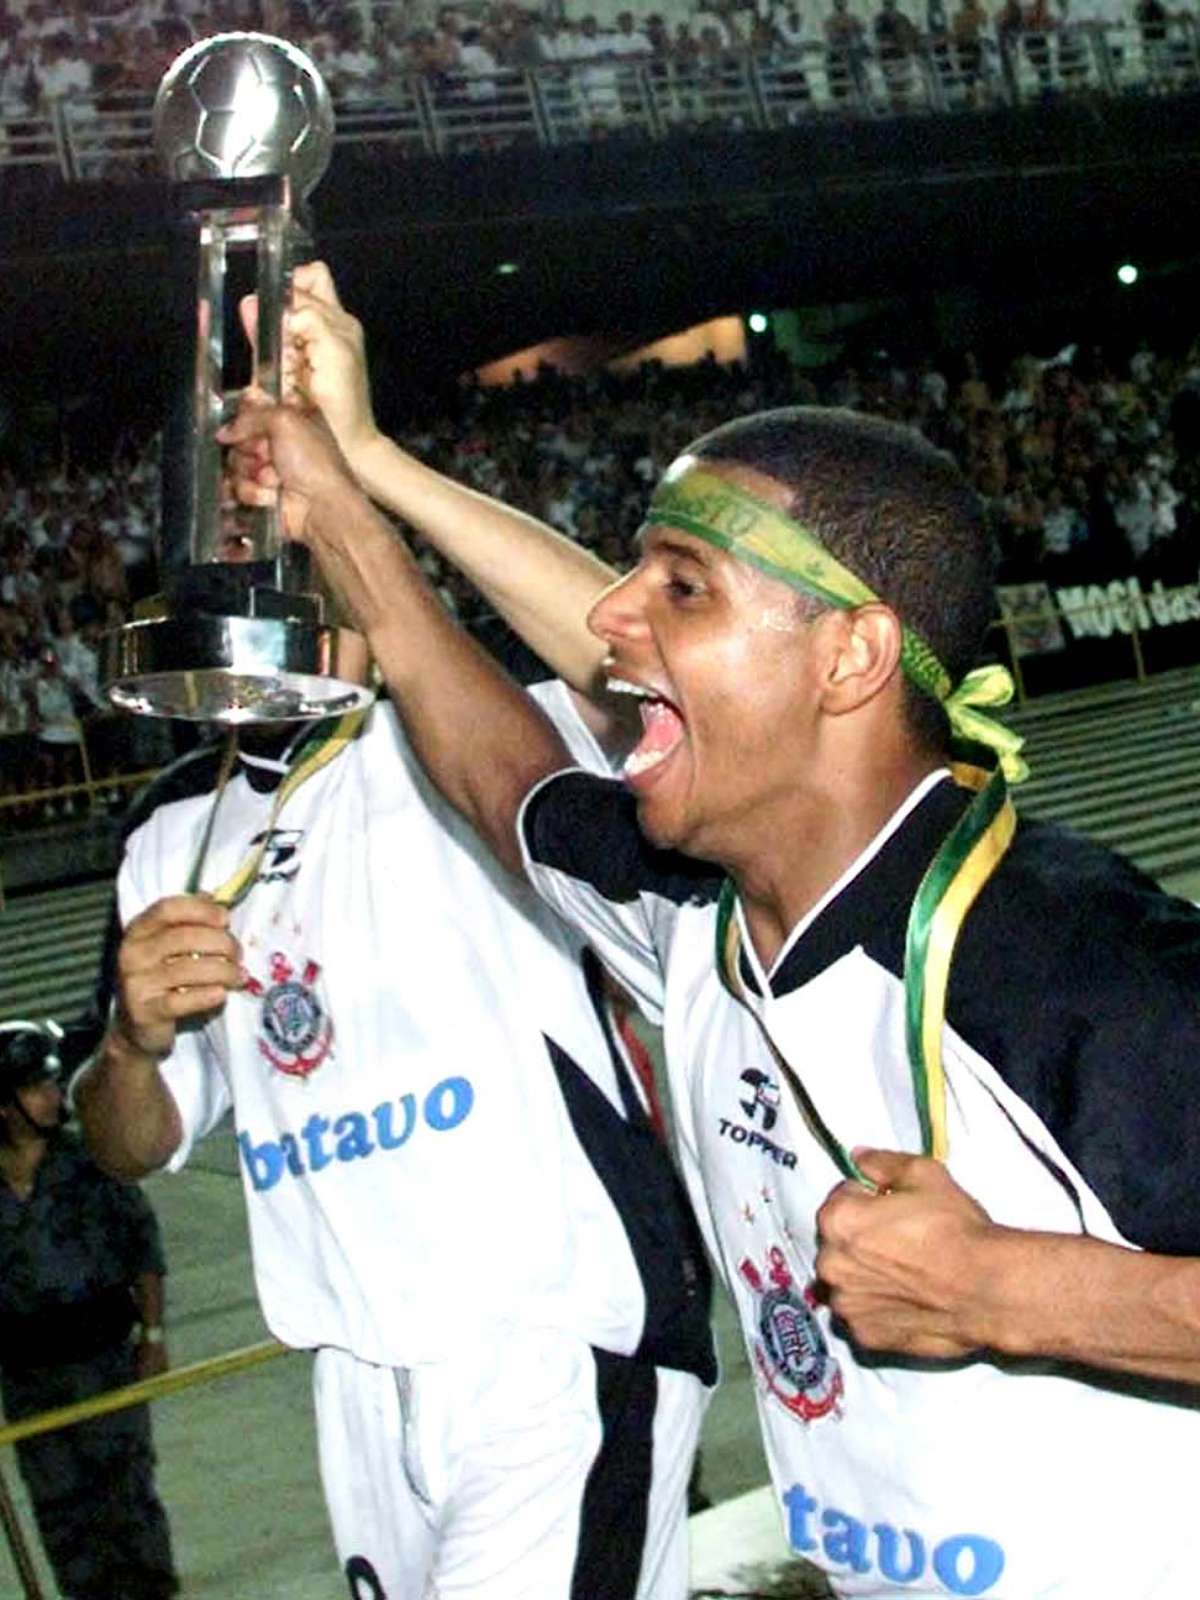 Corinthians Campeão Mundial de Clubes FIFA 2000 